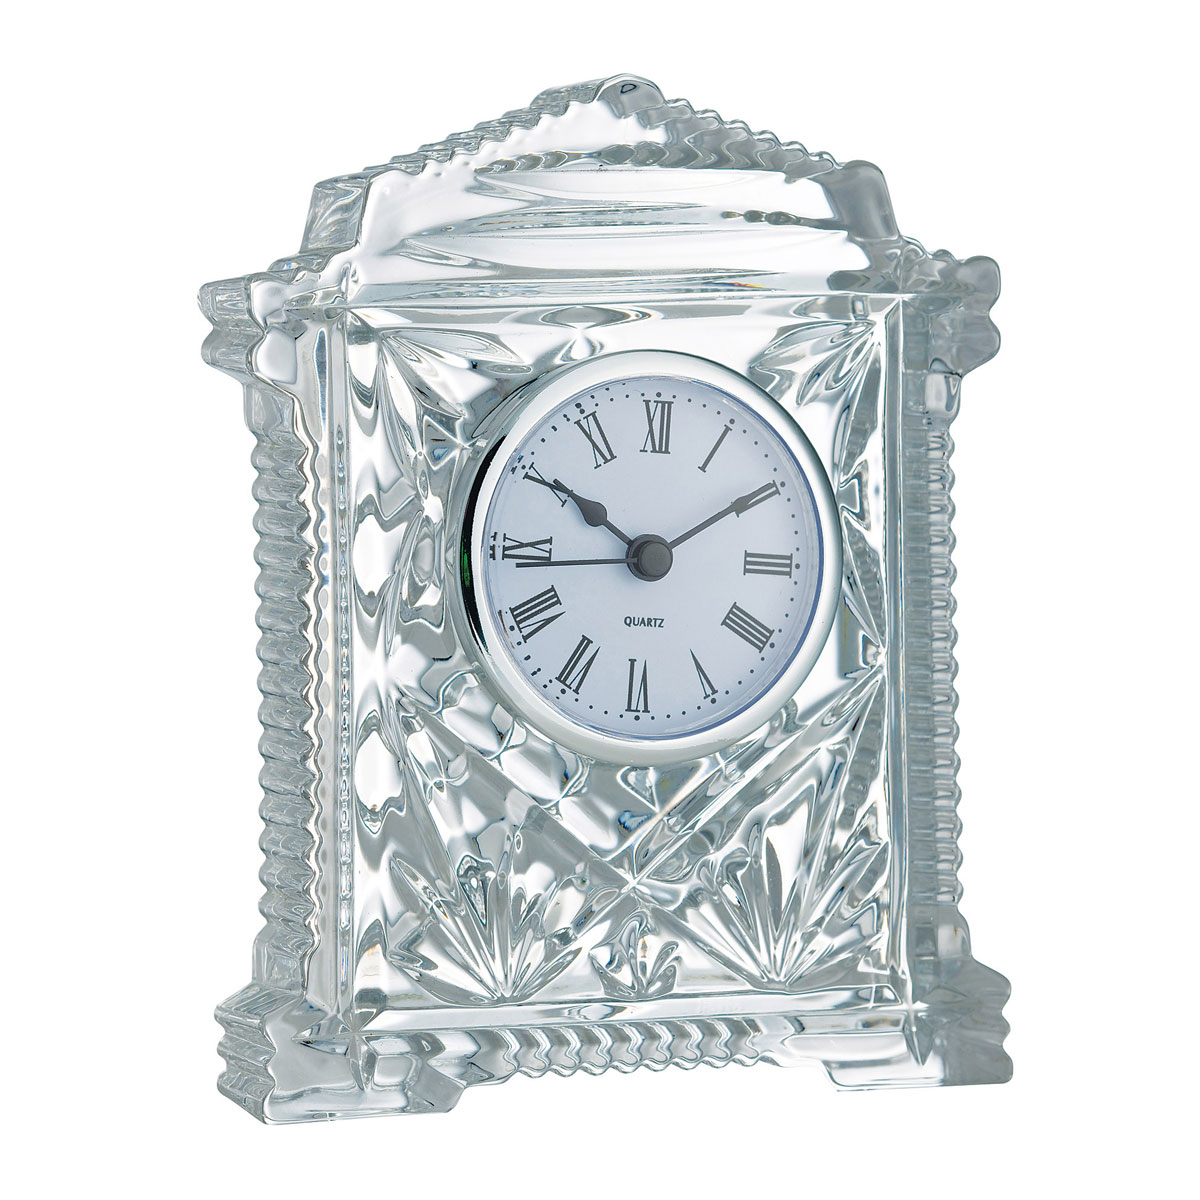 Galway Crystal Lynch Carriage Clock